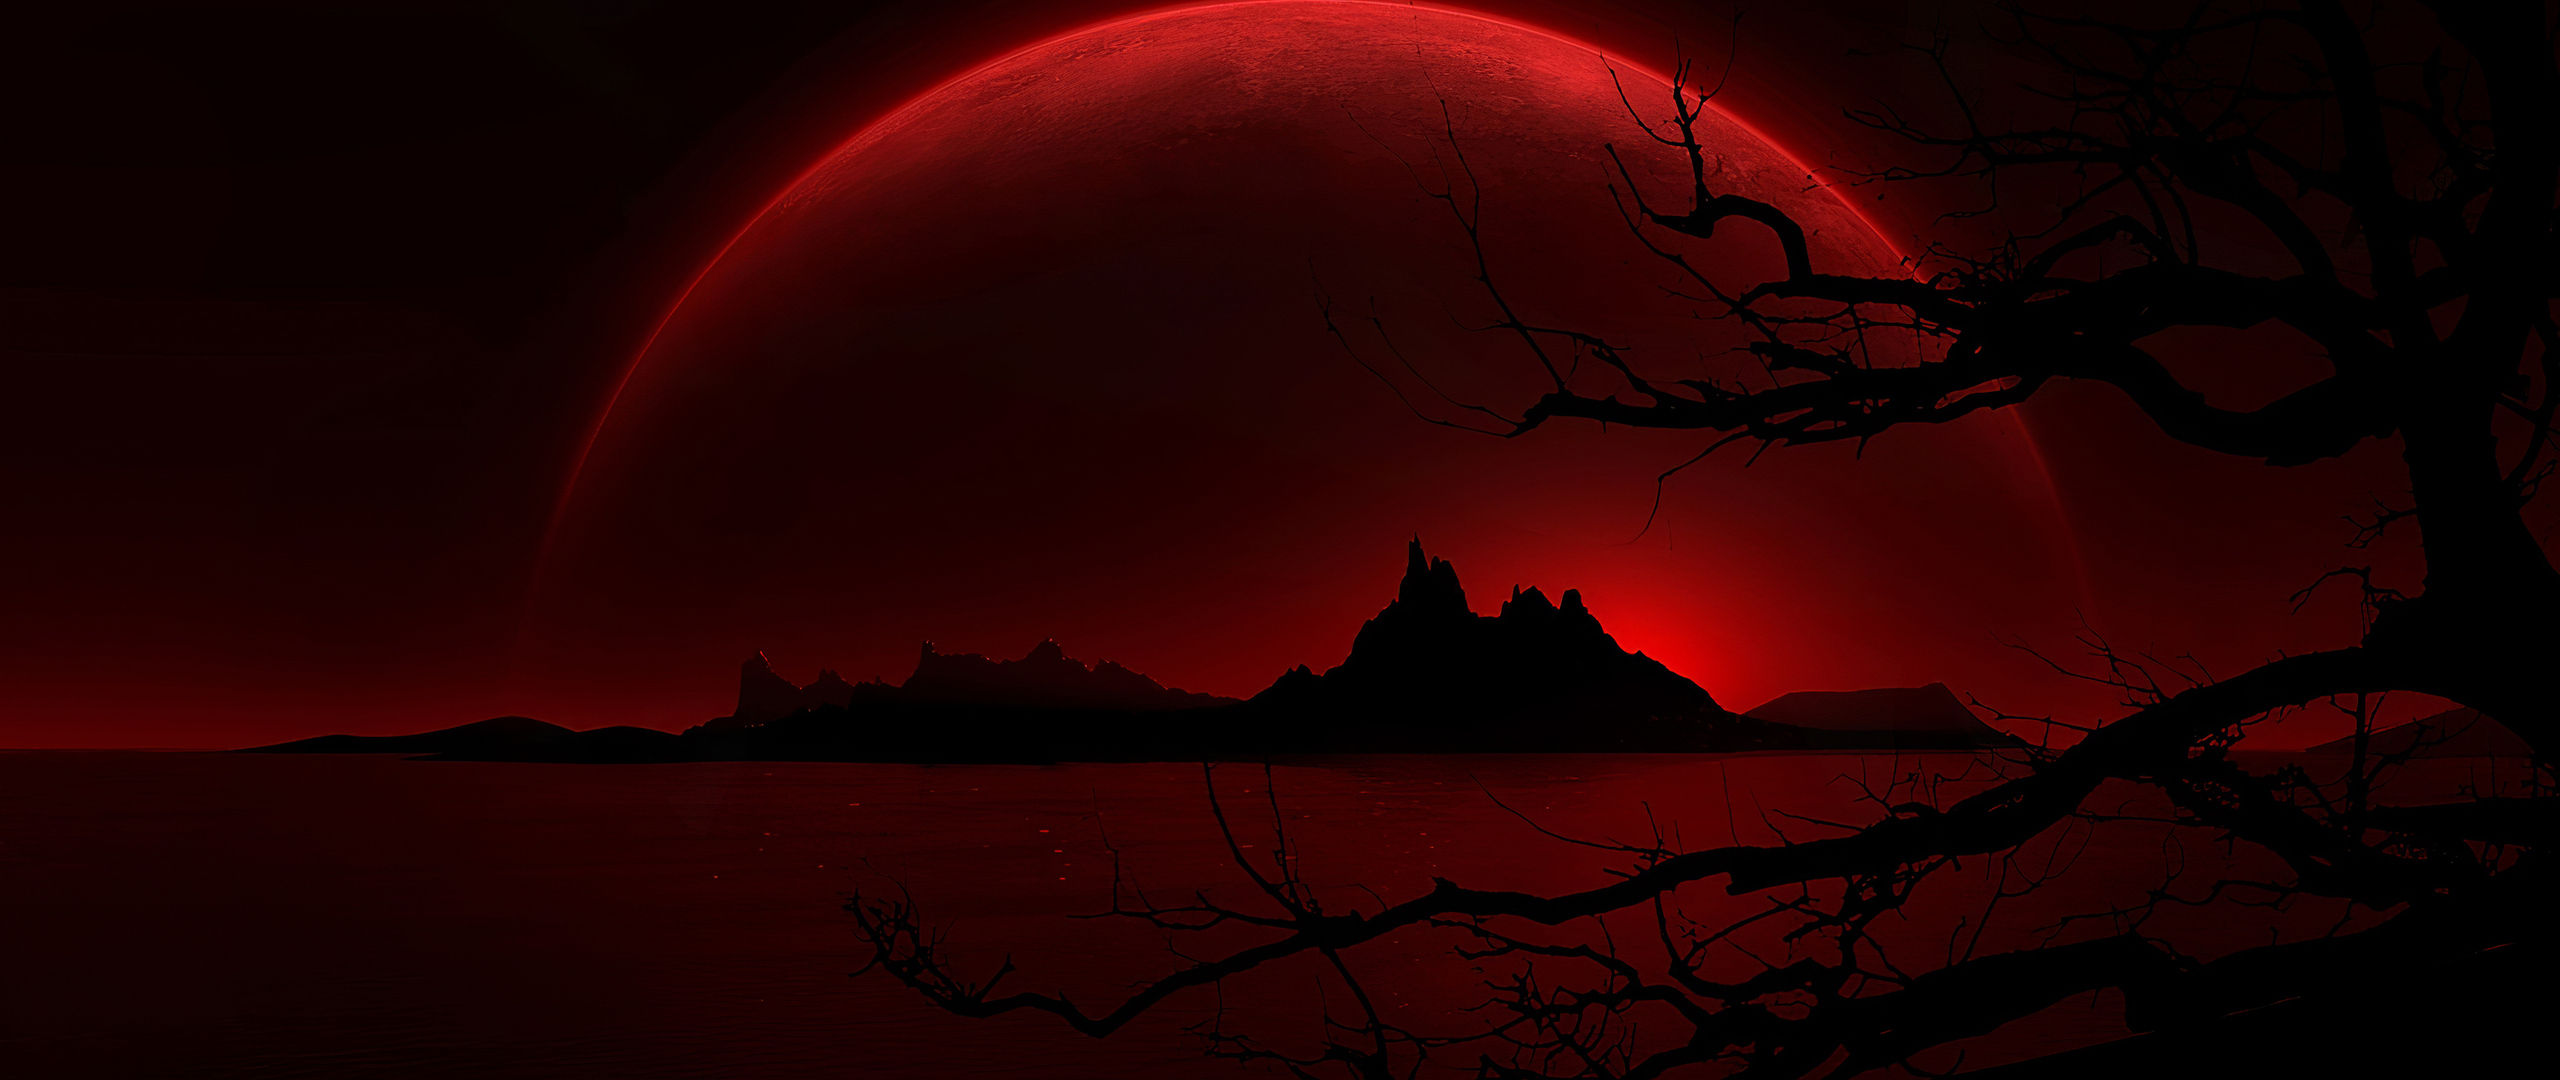 Red Planet Moon 4k In 2560x1080 Resolution. red-planet-moon-4k-zj.jpg. 